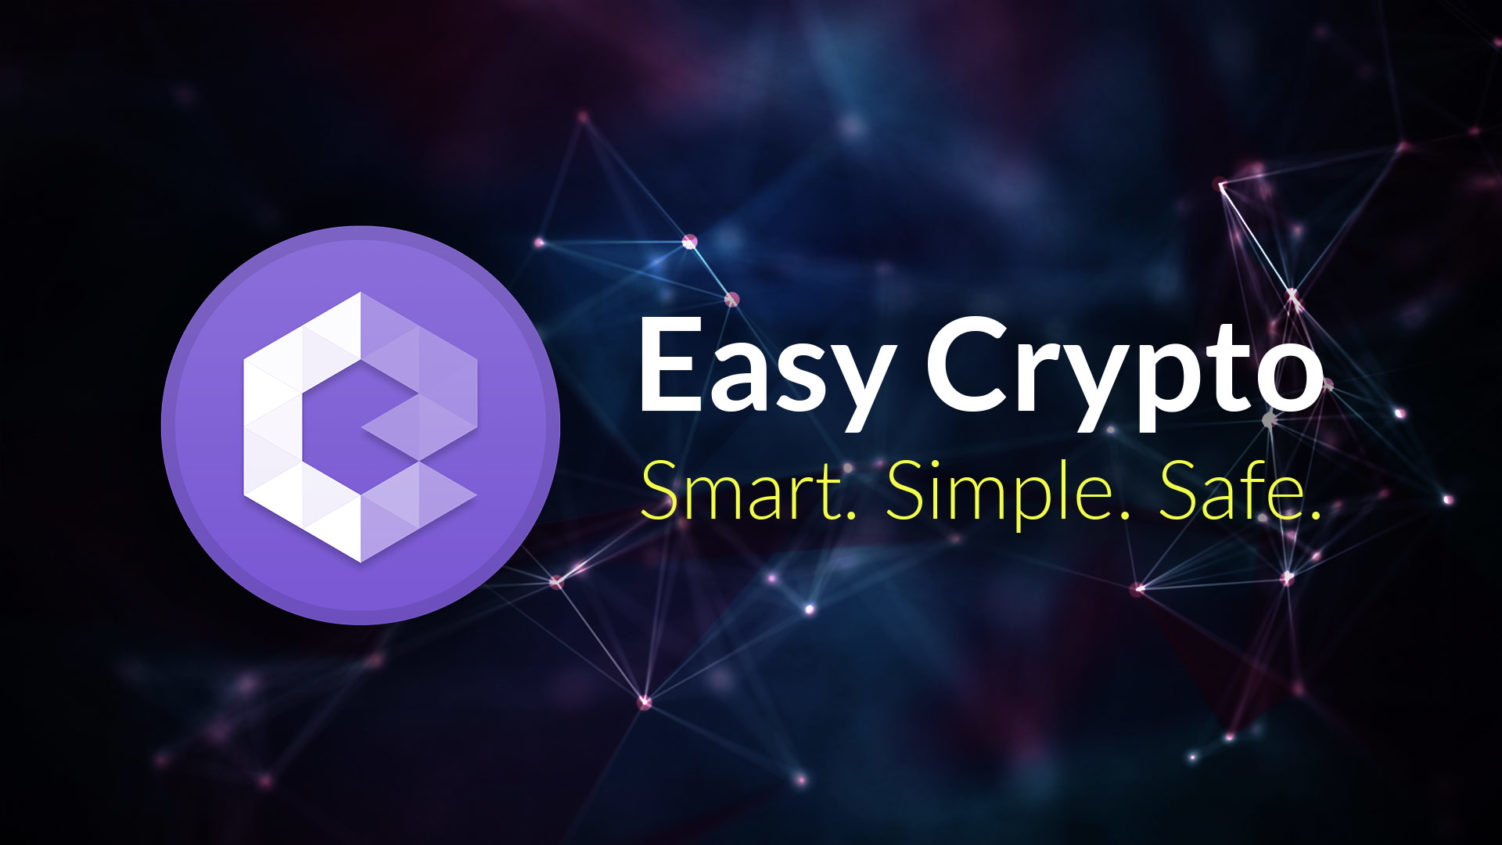 Easy Crypto logo and tagline on dark background